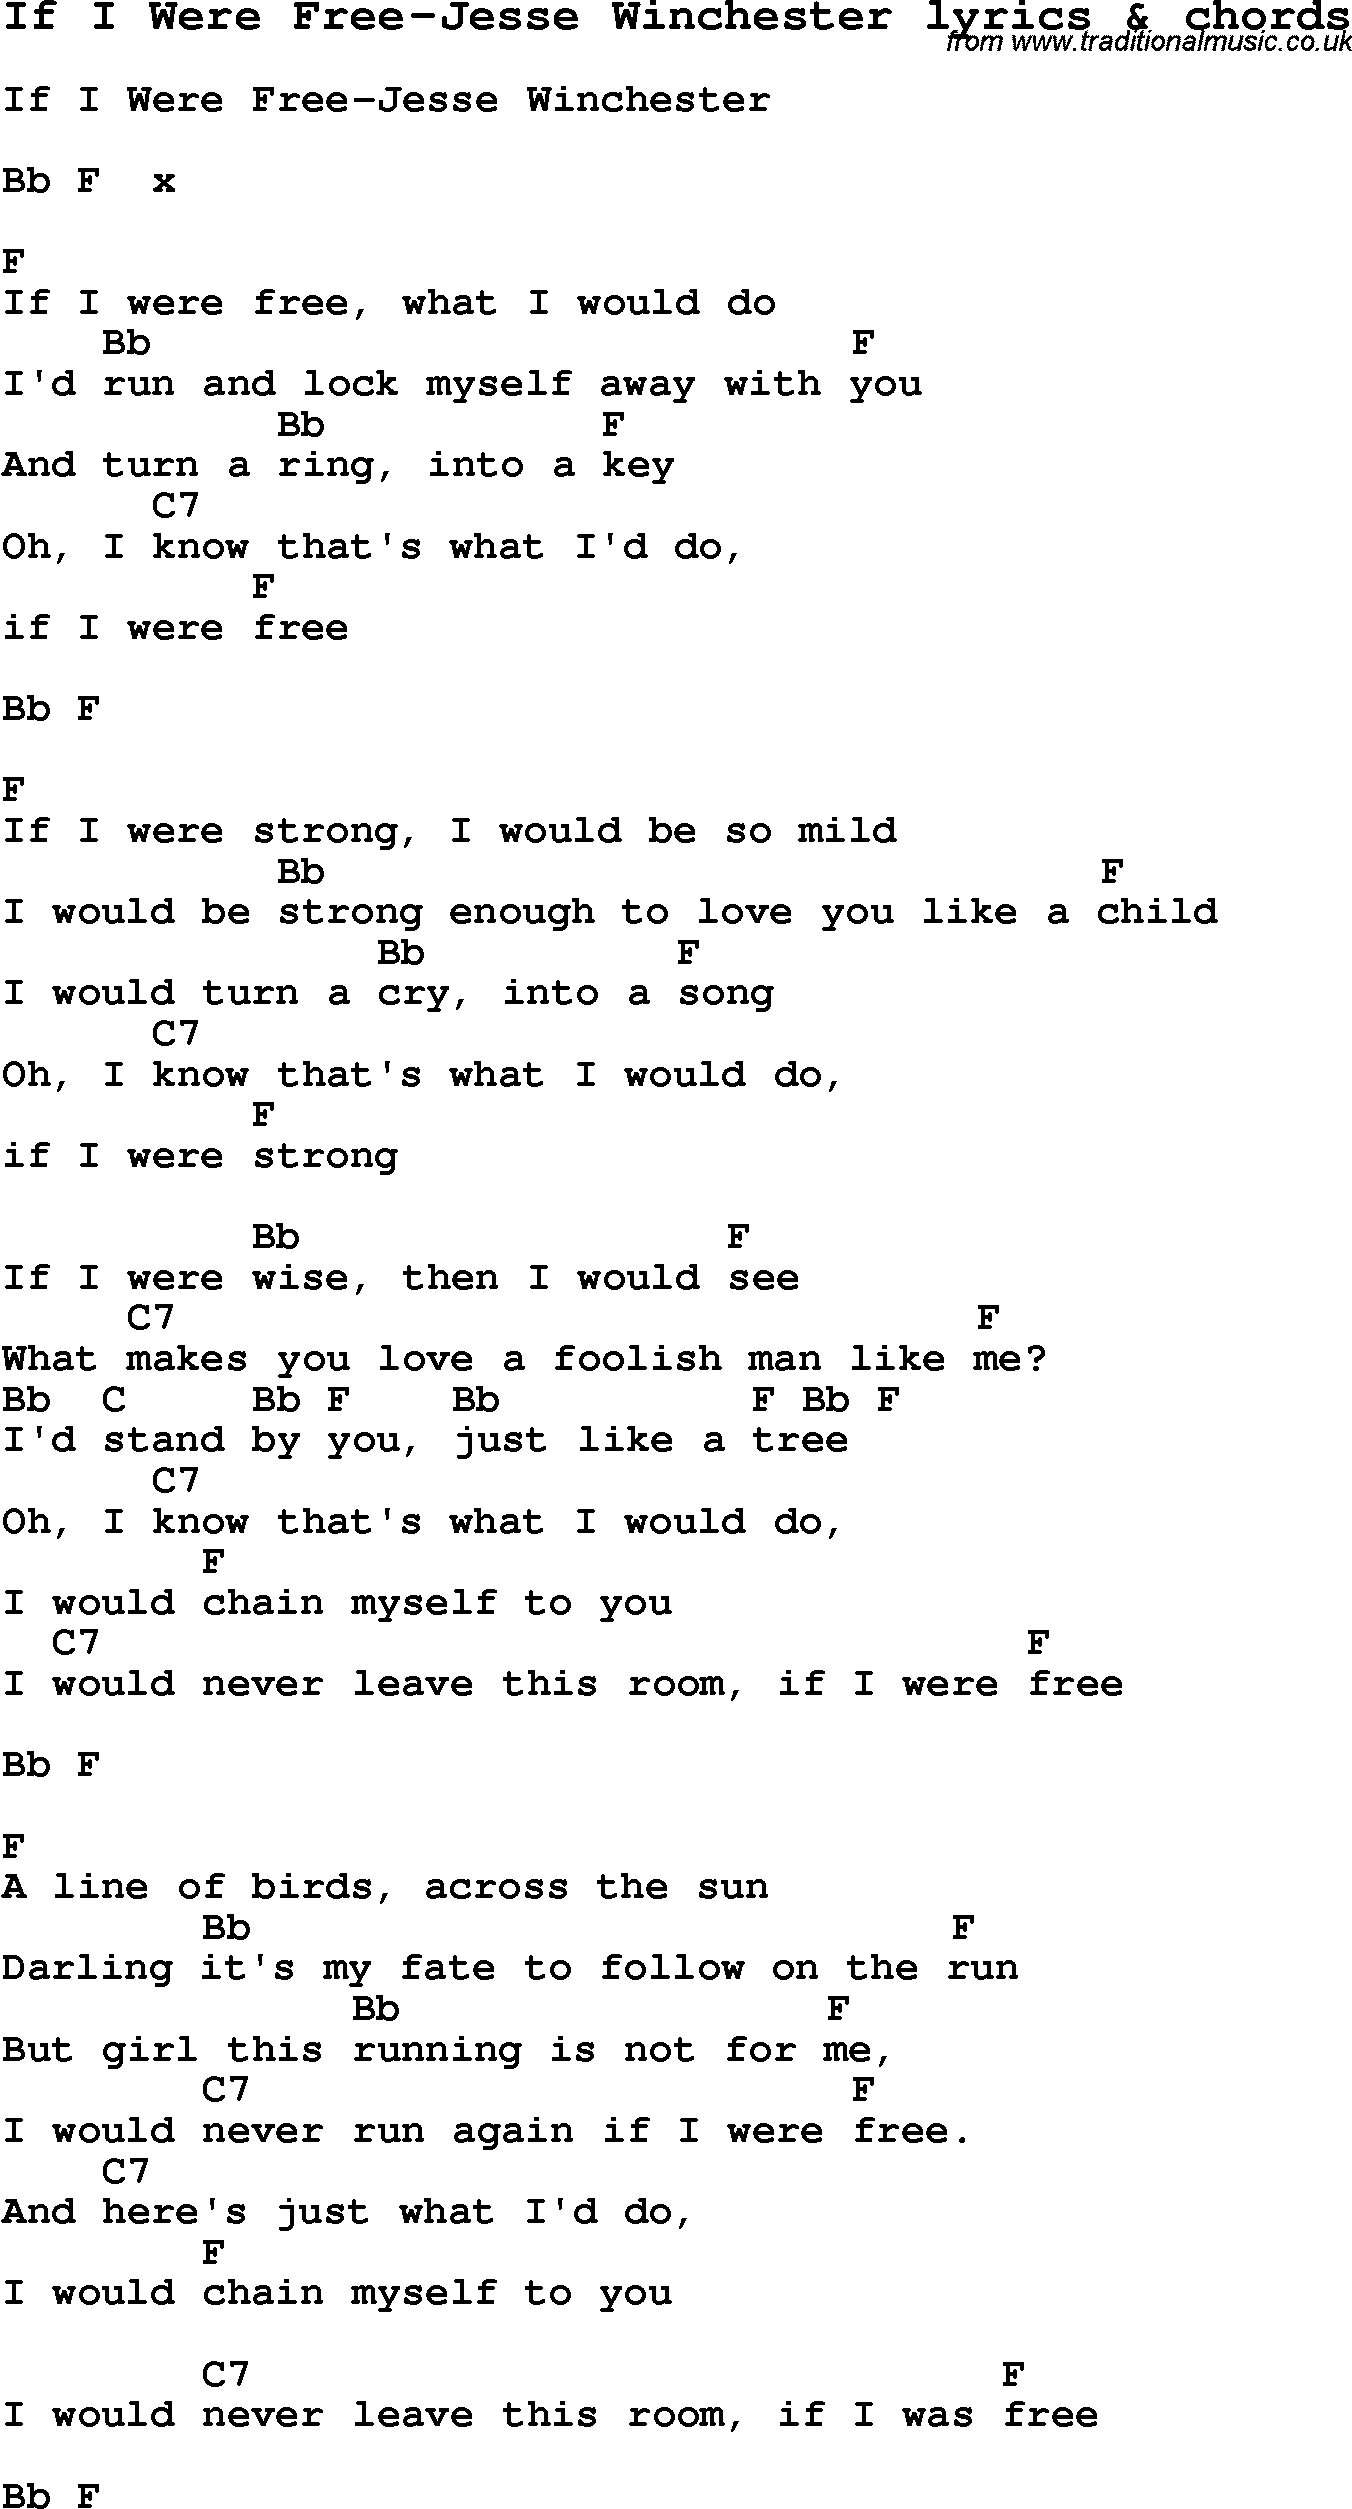 Love Song Lyrics for: If I Were Free-Jesse Winchester with chords for Ukulele, Guitar Banjo etc.